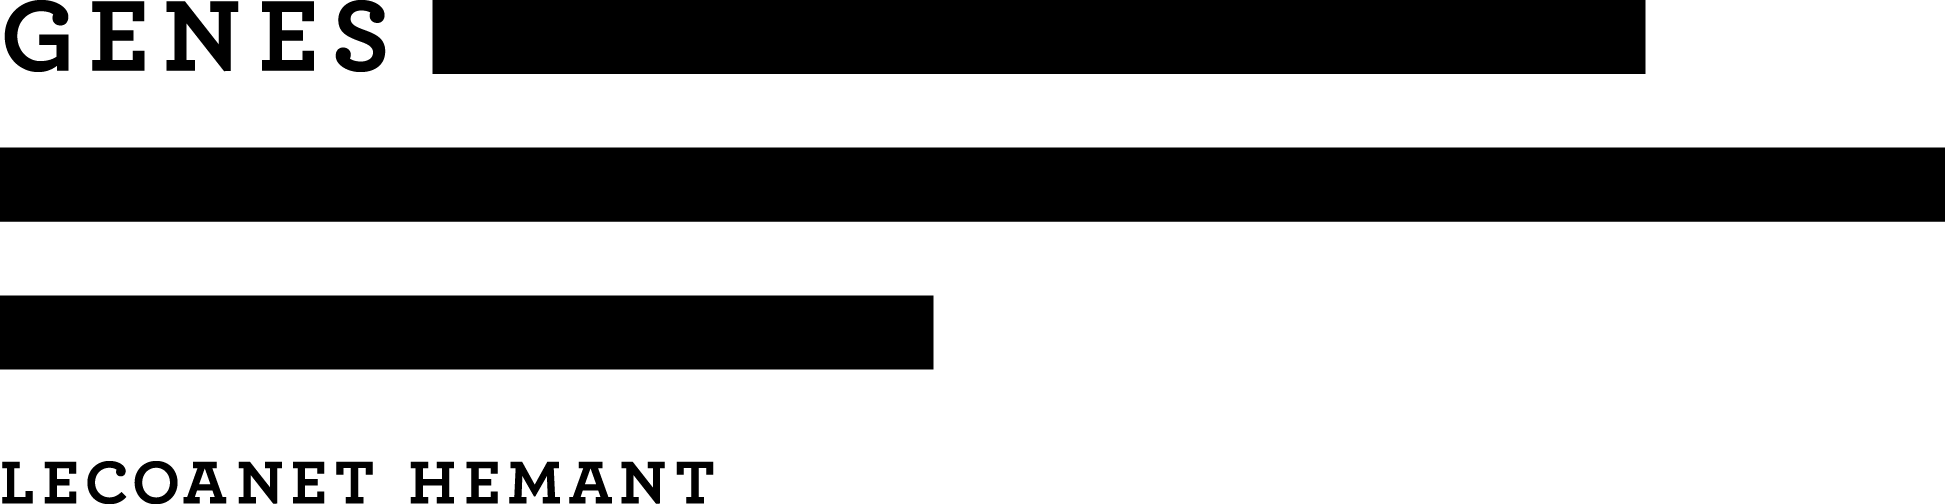 Genes Lecoanet Hemant Logo